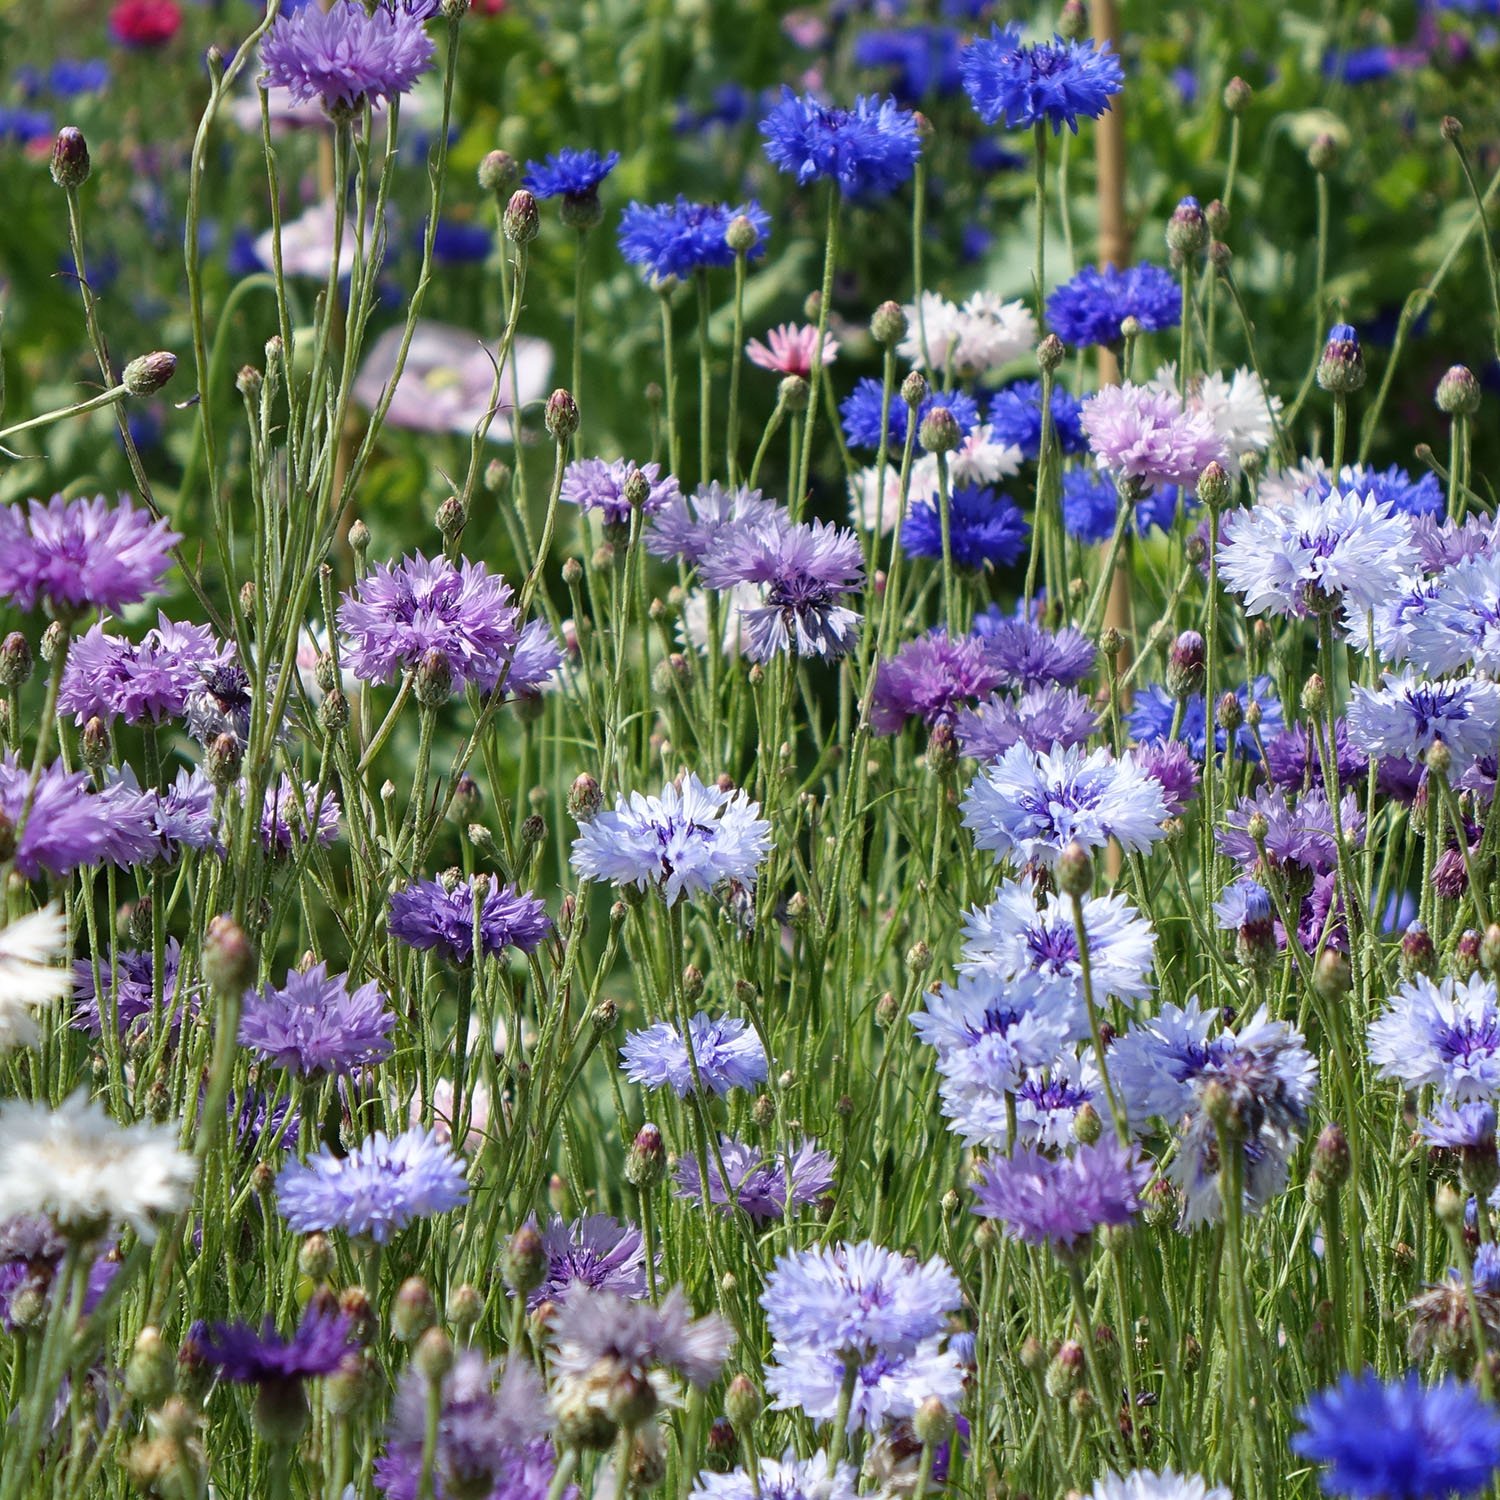 Mixed Lilac Blue Cornflowers Early Summer.jpg